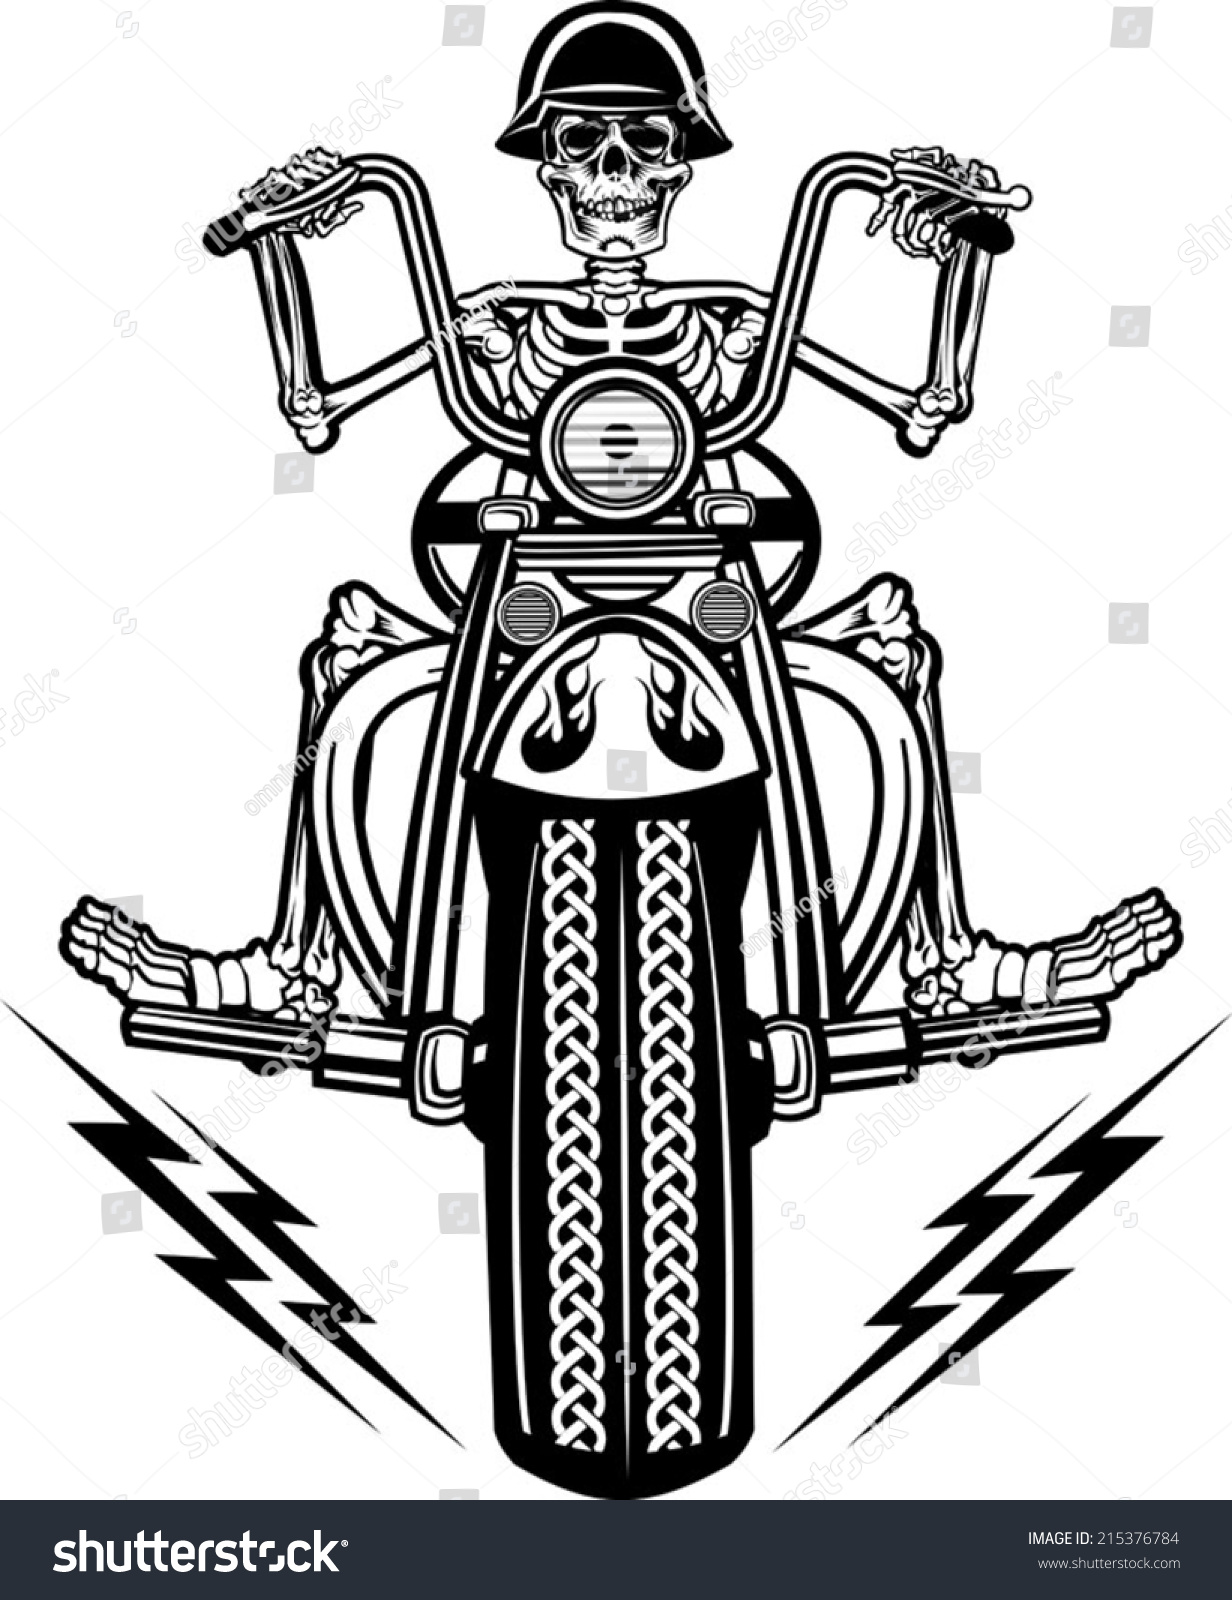 Skeleton On Motorcycle Stock Vector Illustration 215376784 Shutterstock